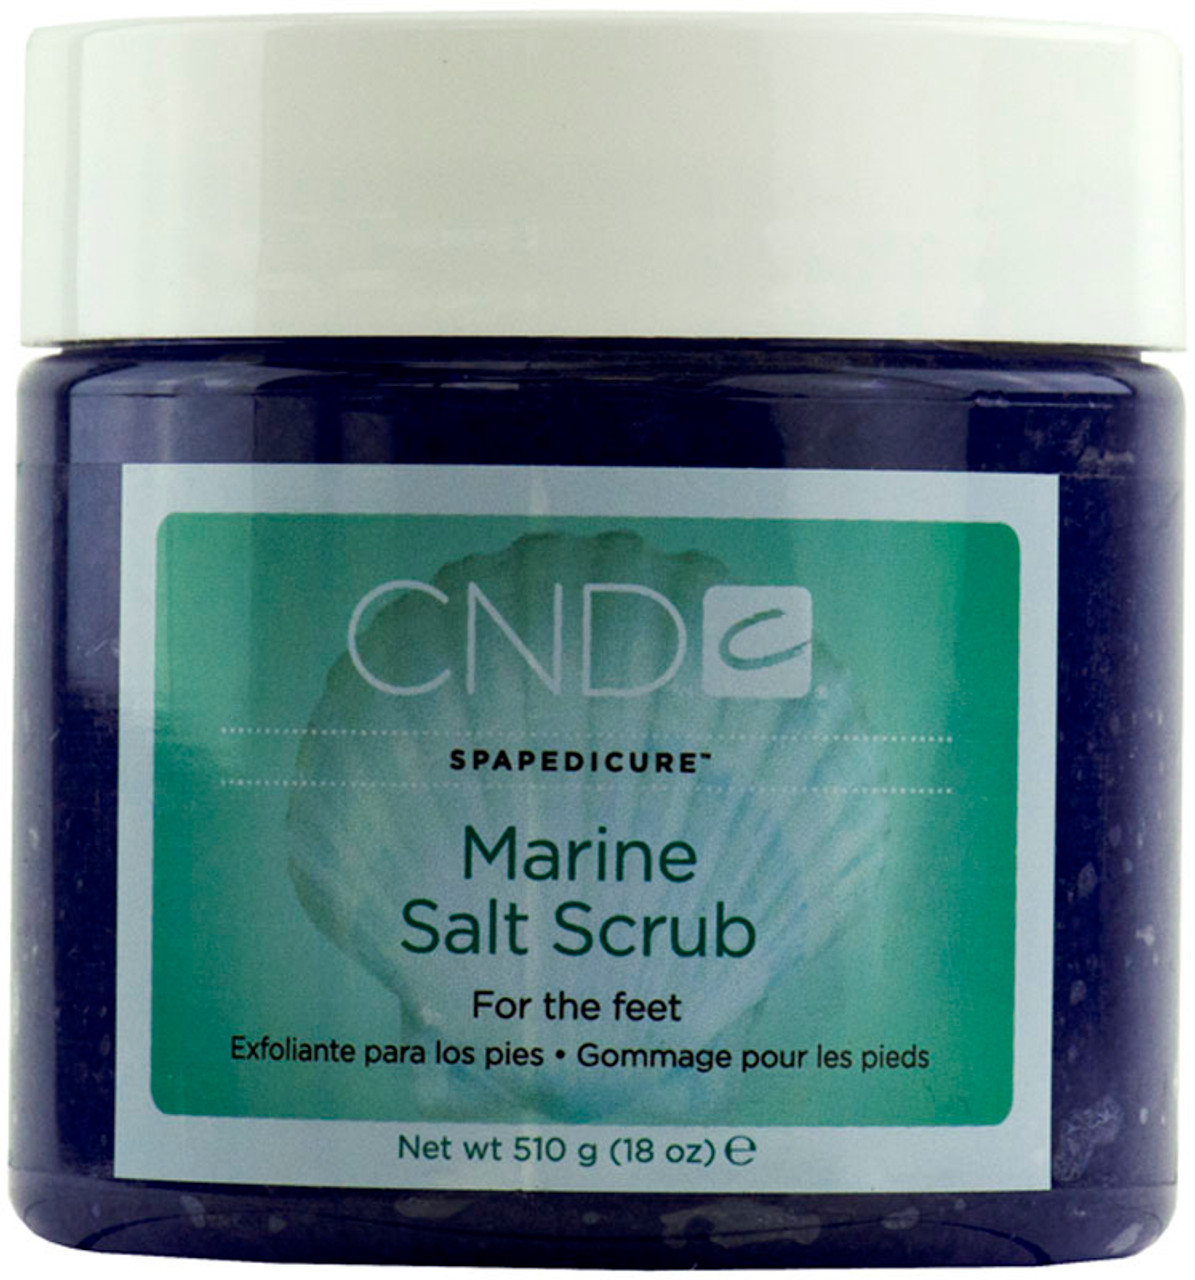 CND Spapedicure Marine Salt Scrub SleekShop.com